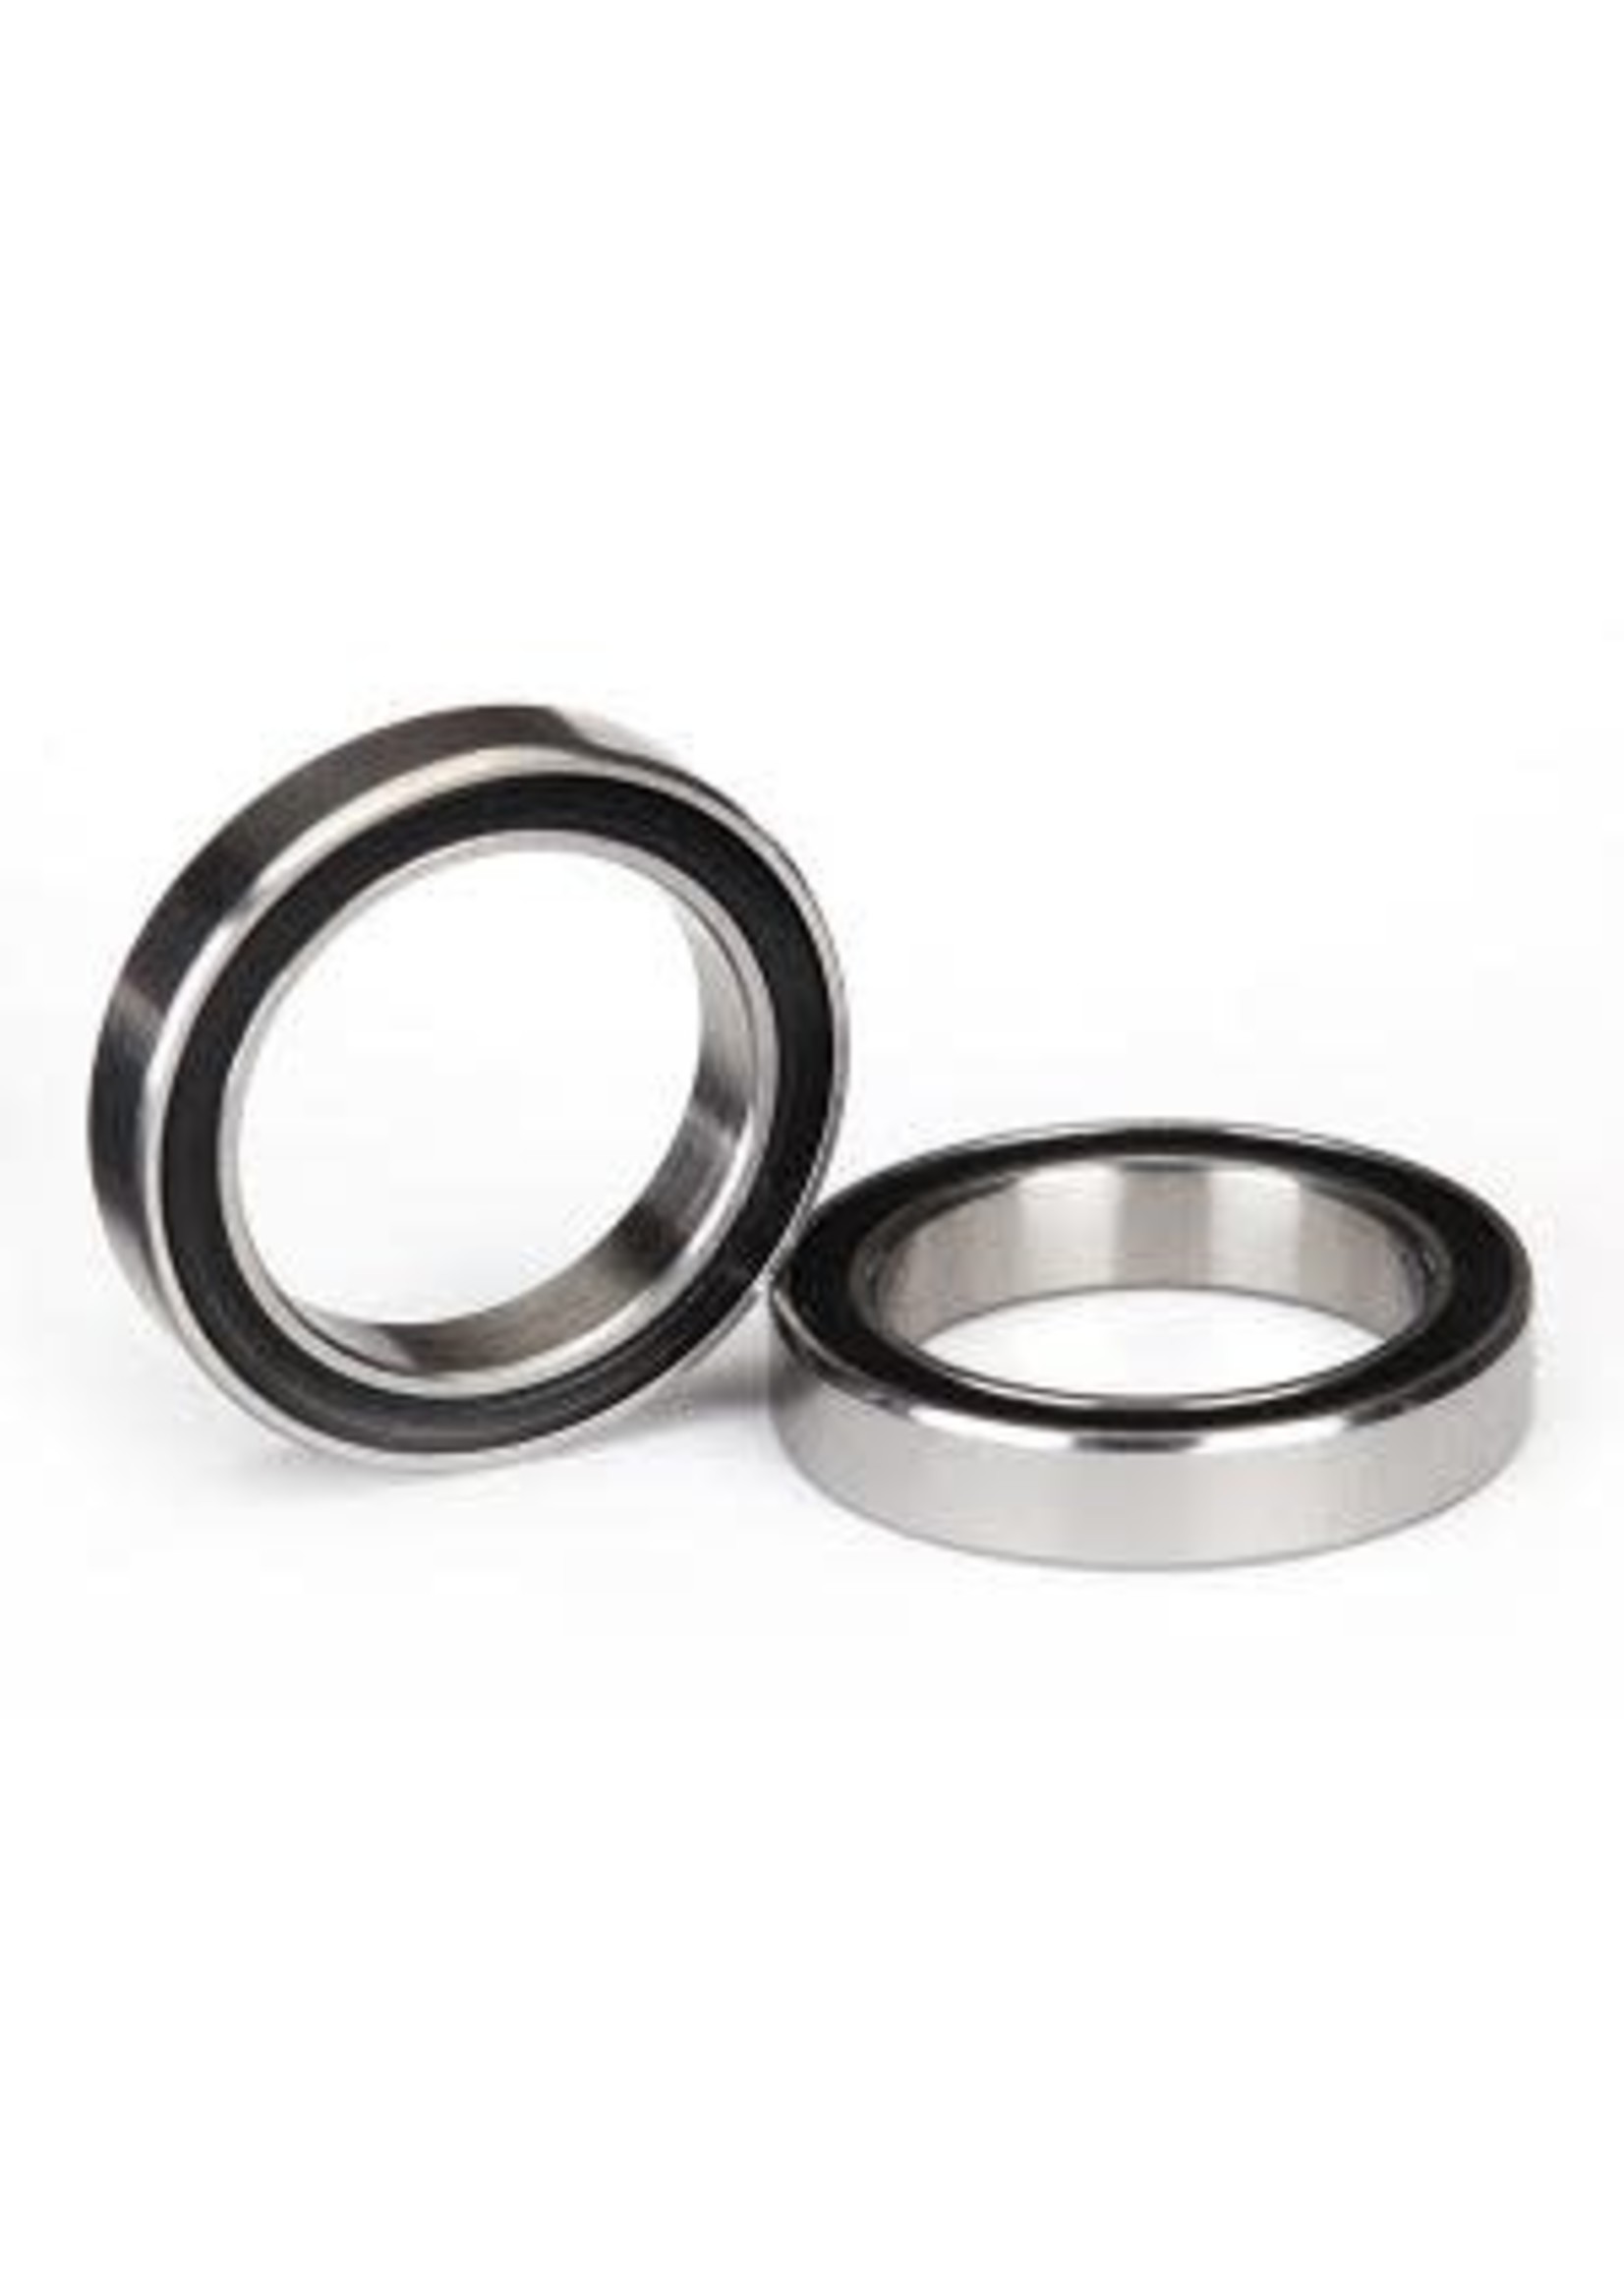 Traxxas 5102A Ball bearings, black rubber sealed (15x21x4mm) (2)